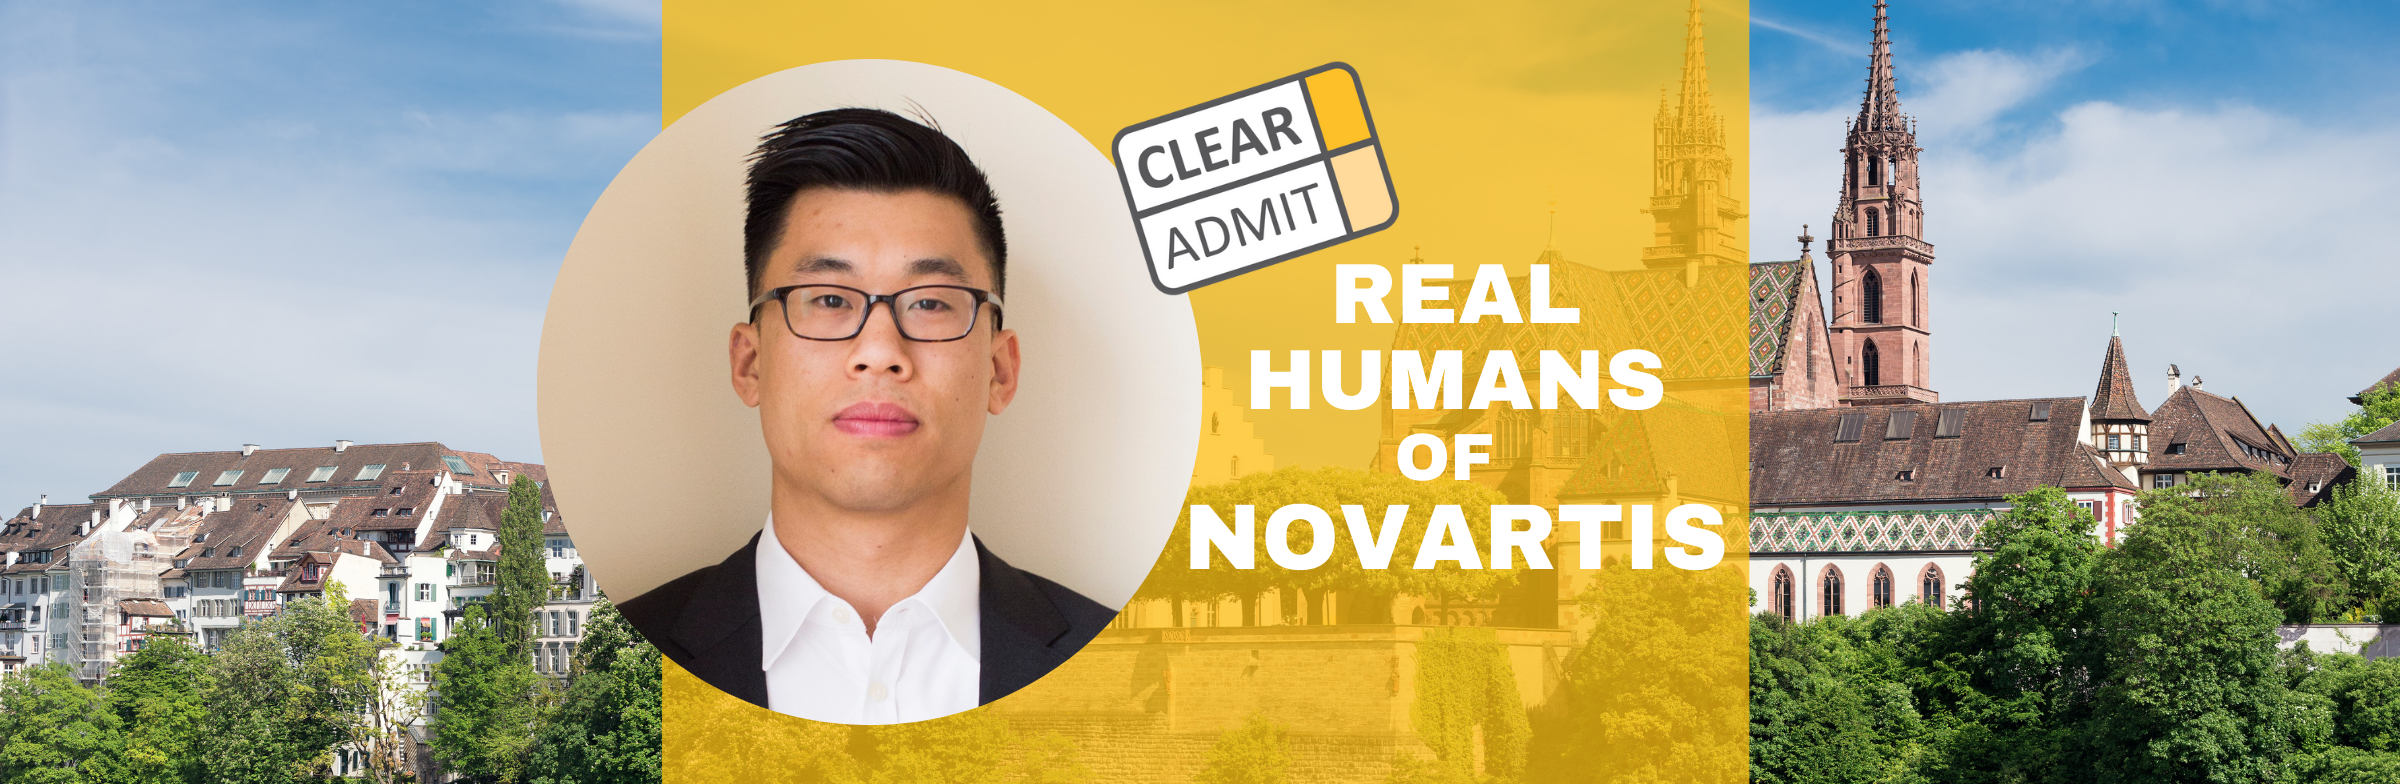 Image for Real Humans of Novartis: Chris Fan, NYU Stern ‘20, Finance Development Program (FDP) Associate